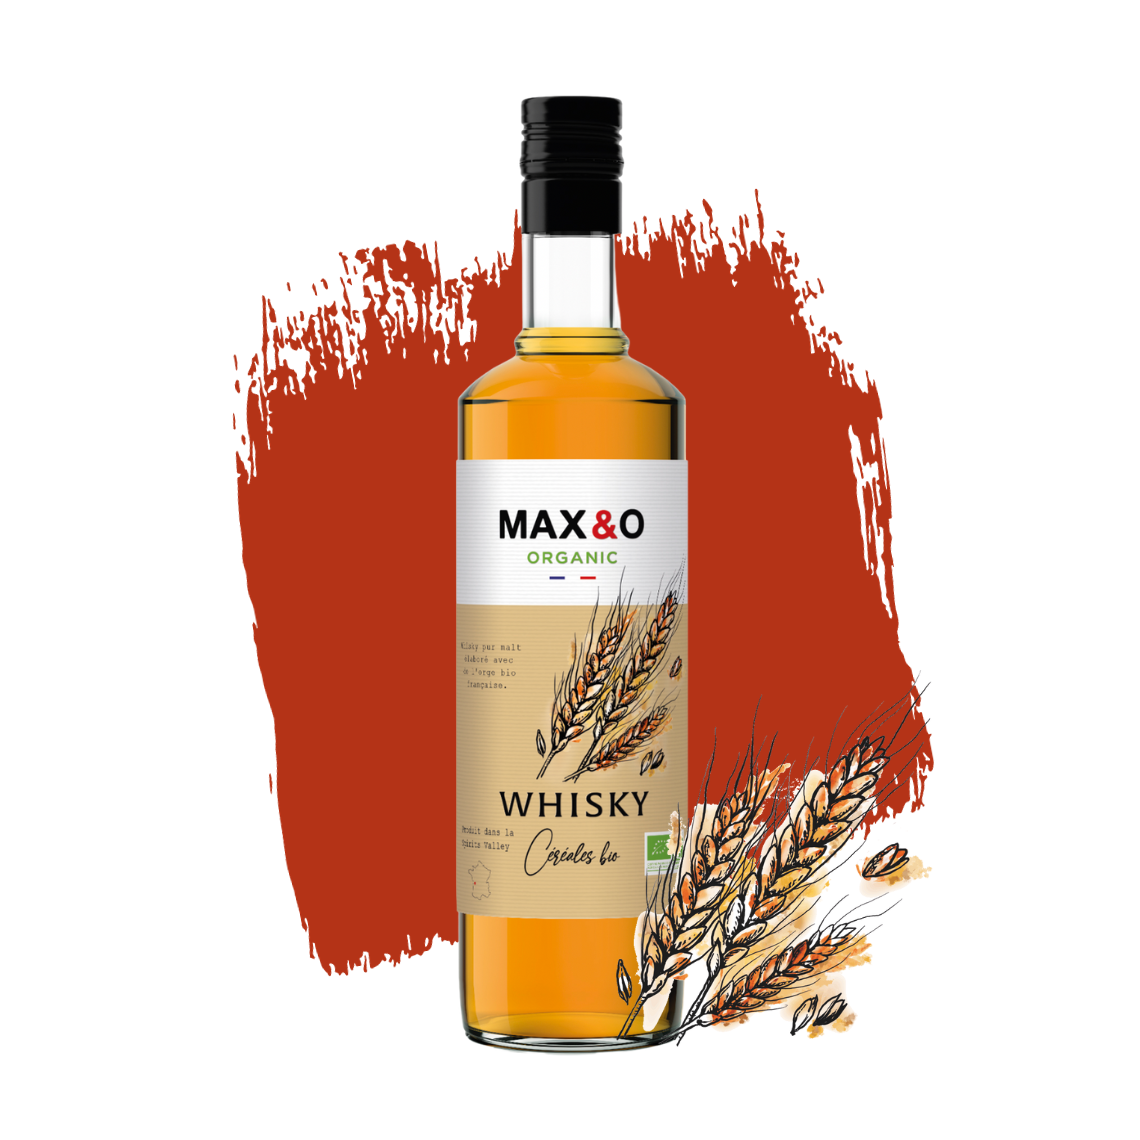 MAX&O Whisky